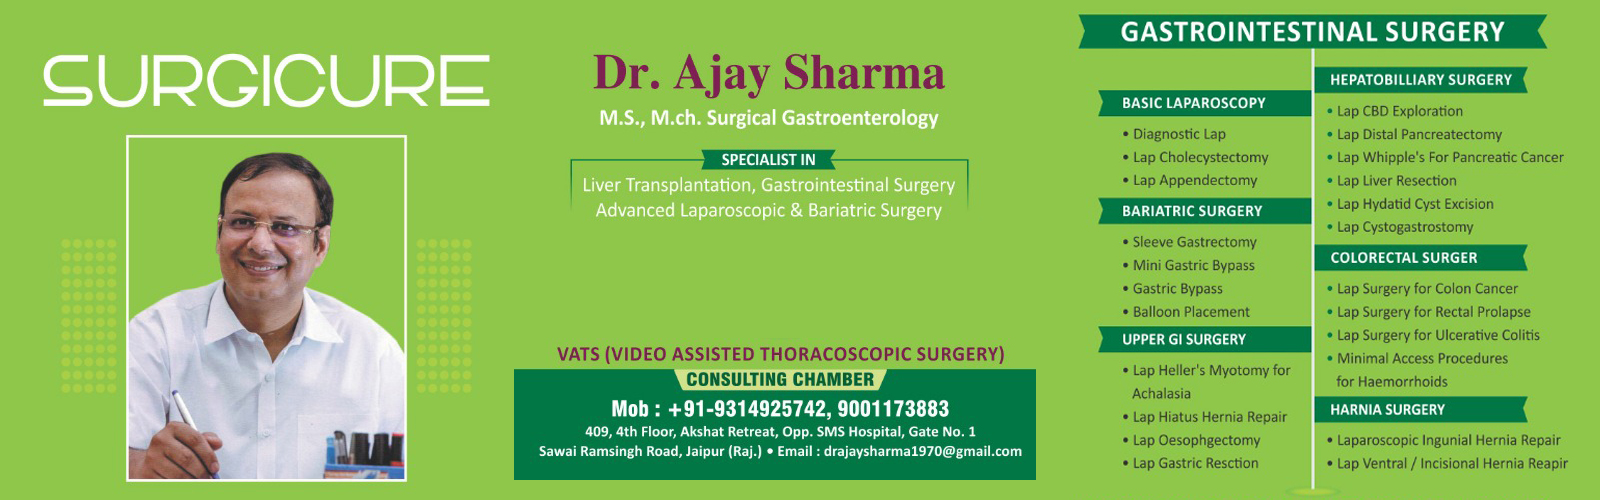 Gastrointestinal Surgeon in Jaipur